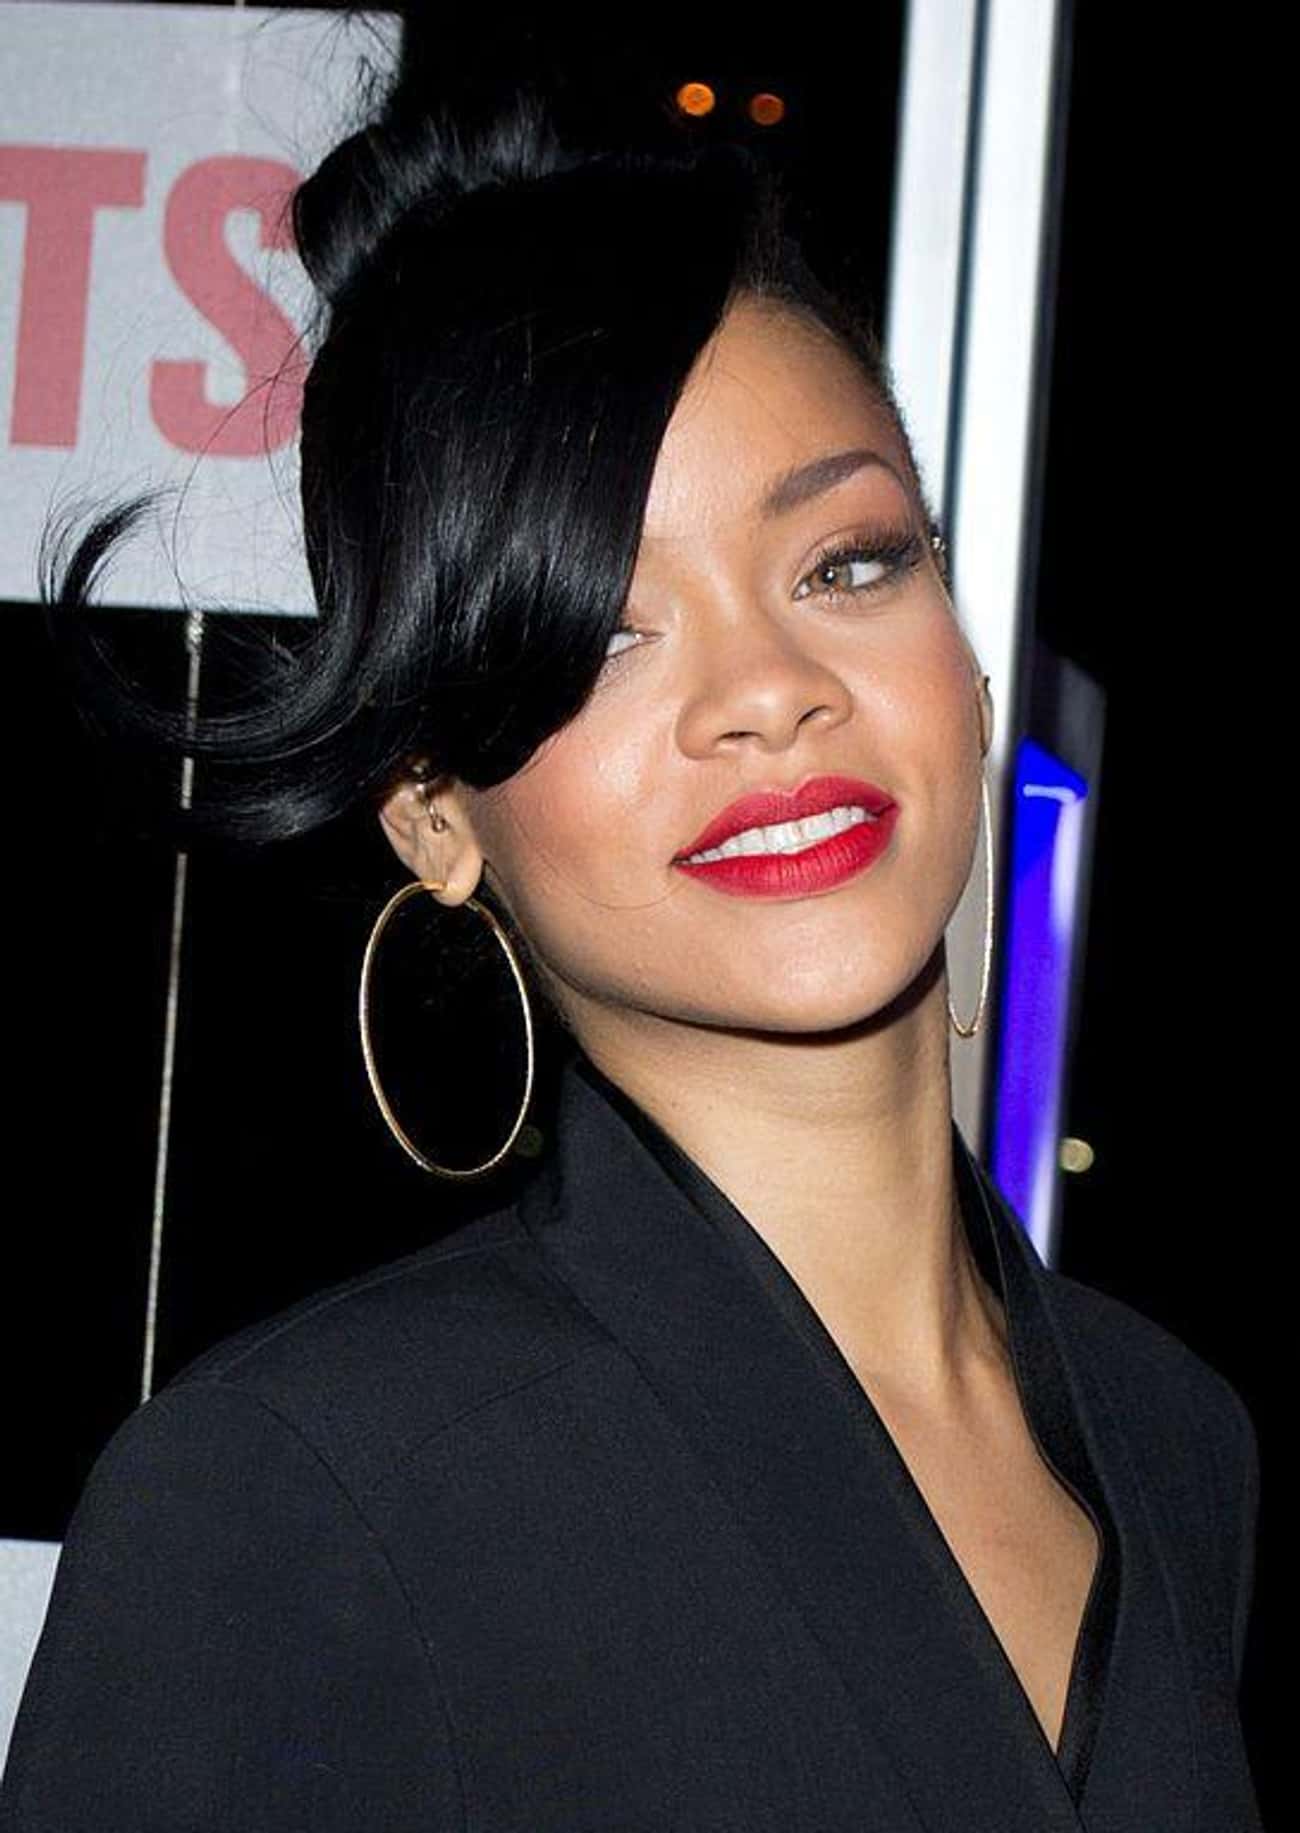 Rihanna - born Robyn Rihanna Fenty